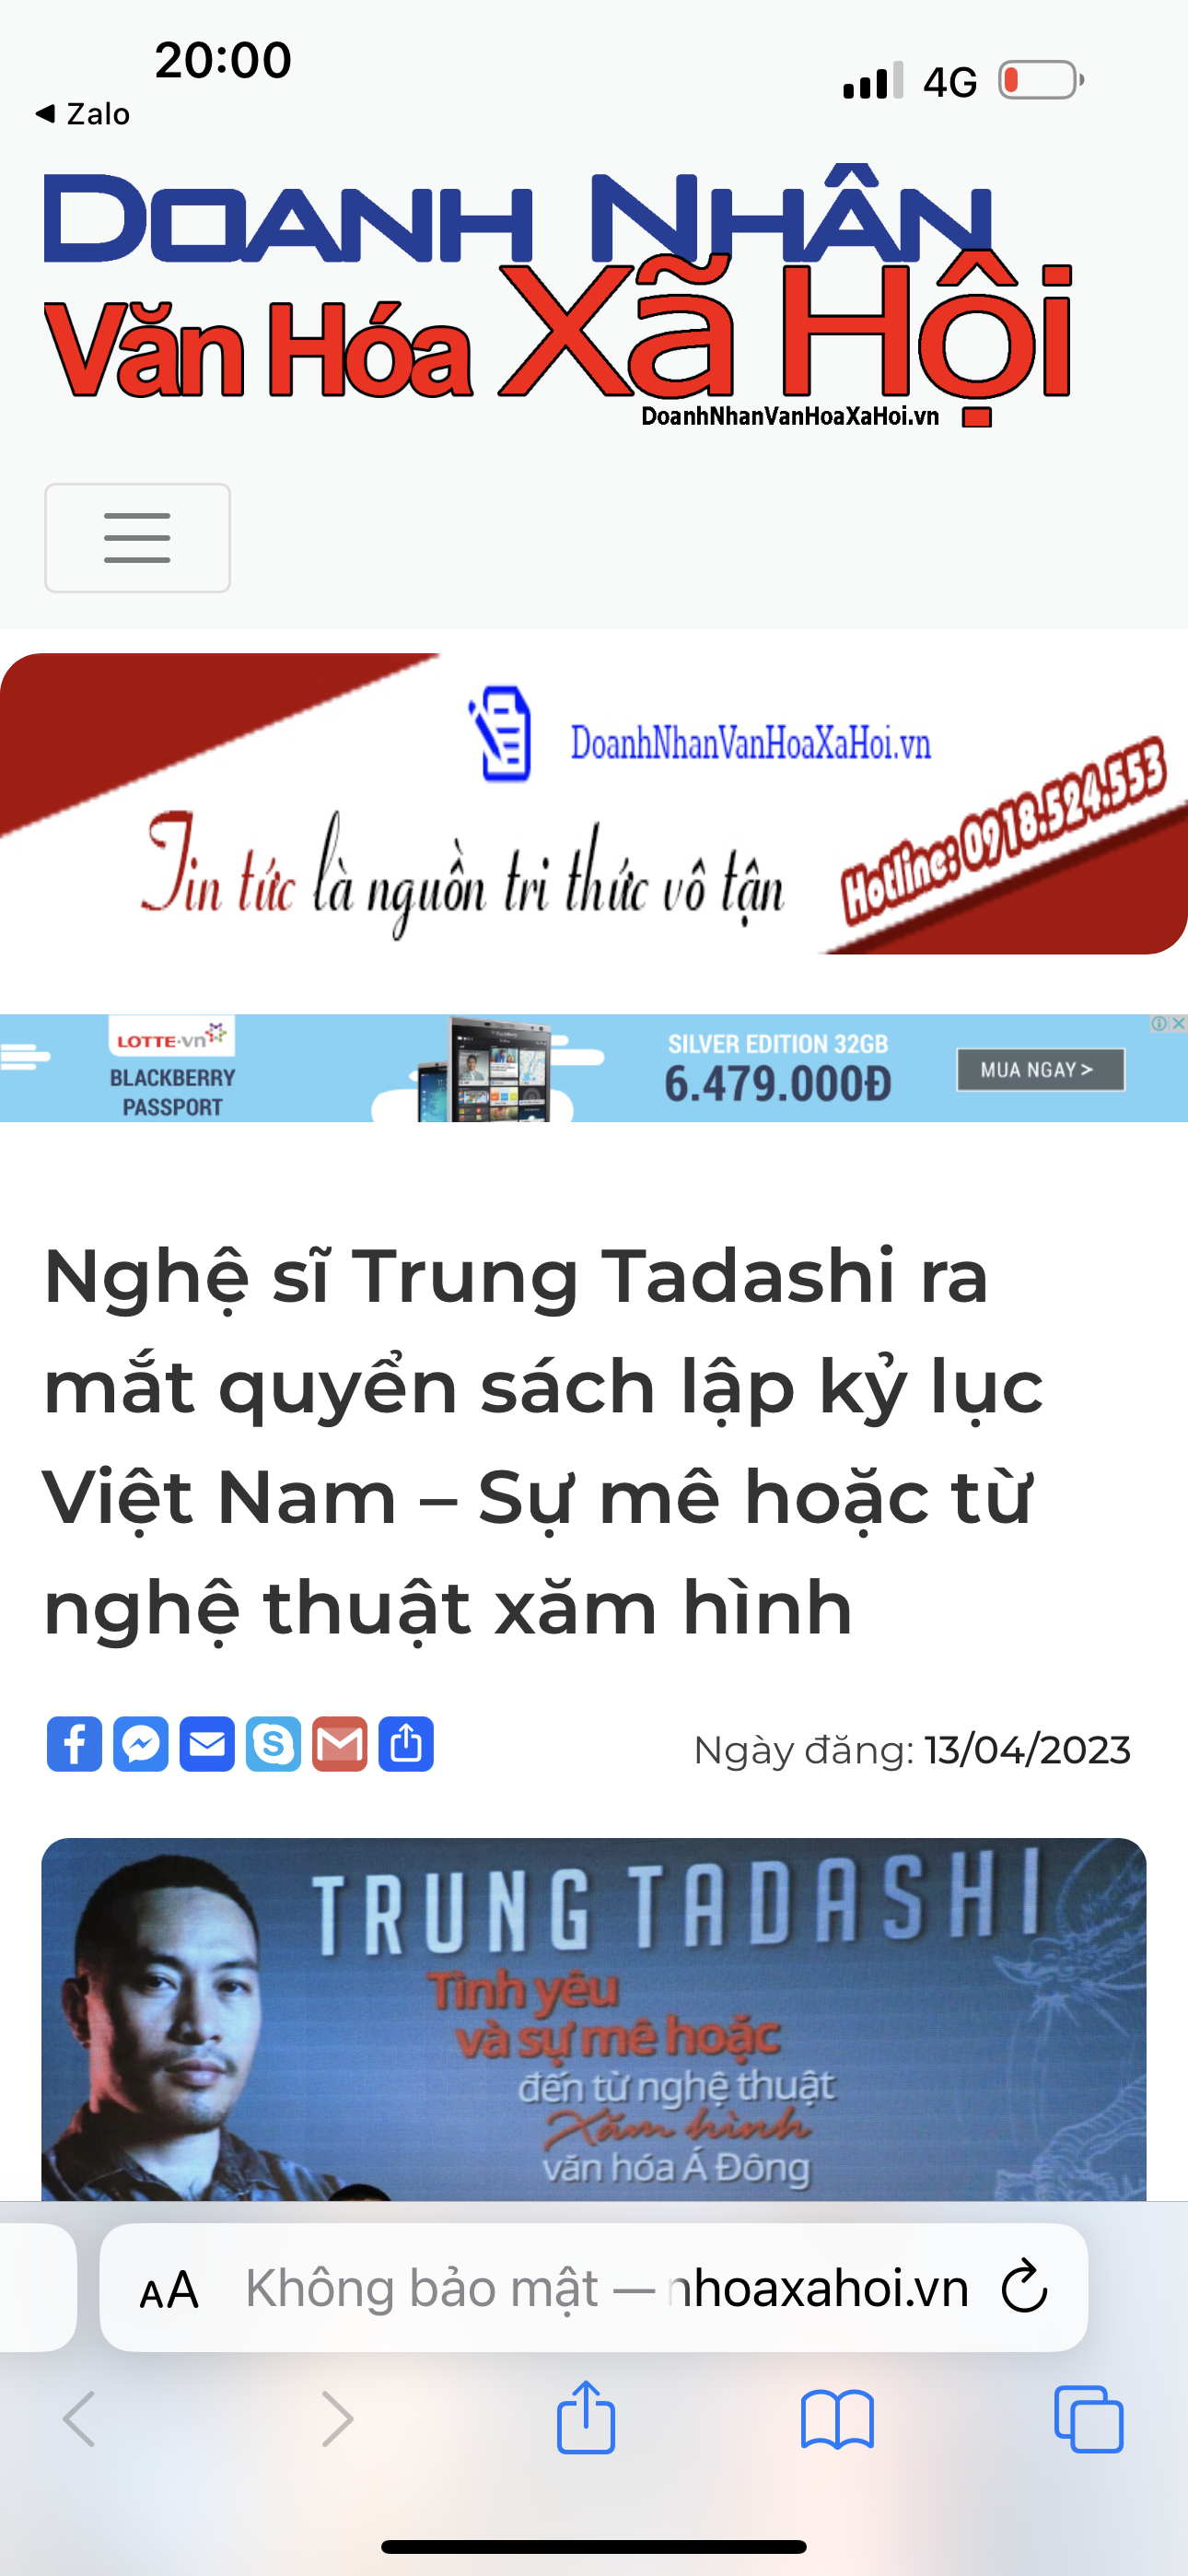 Doanh Nhan Van Hoa Xa Hoi online newspaper